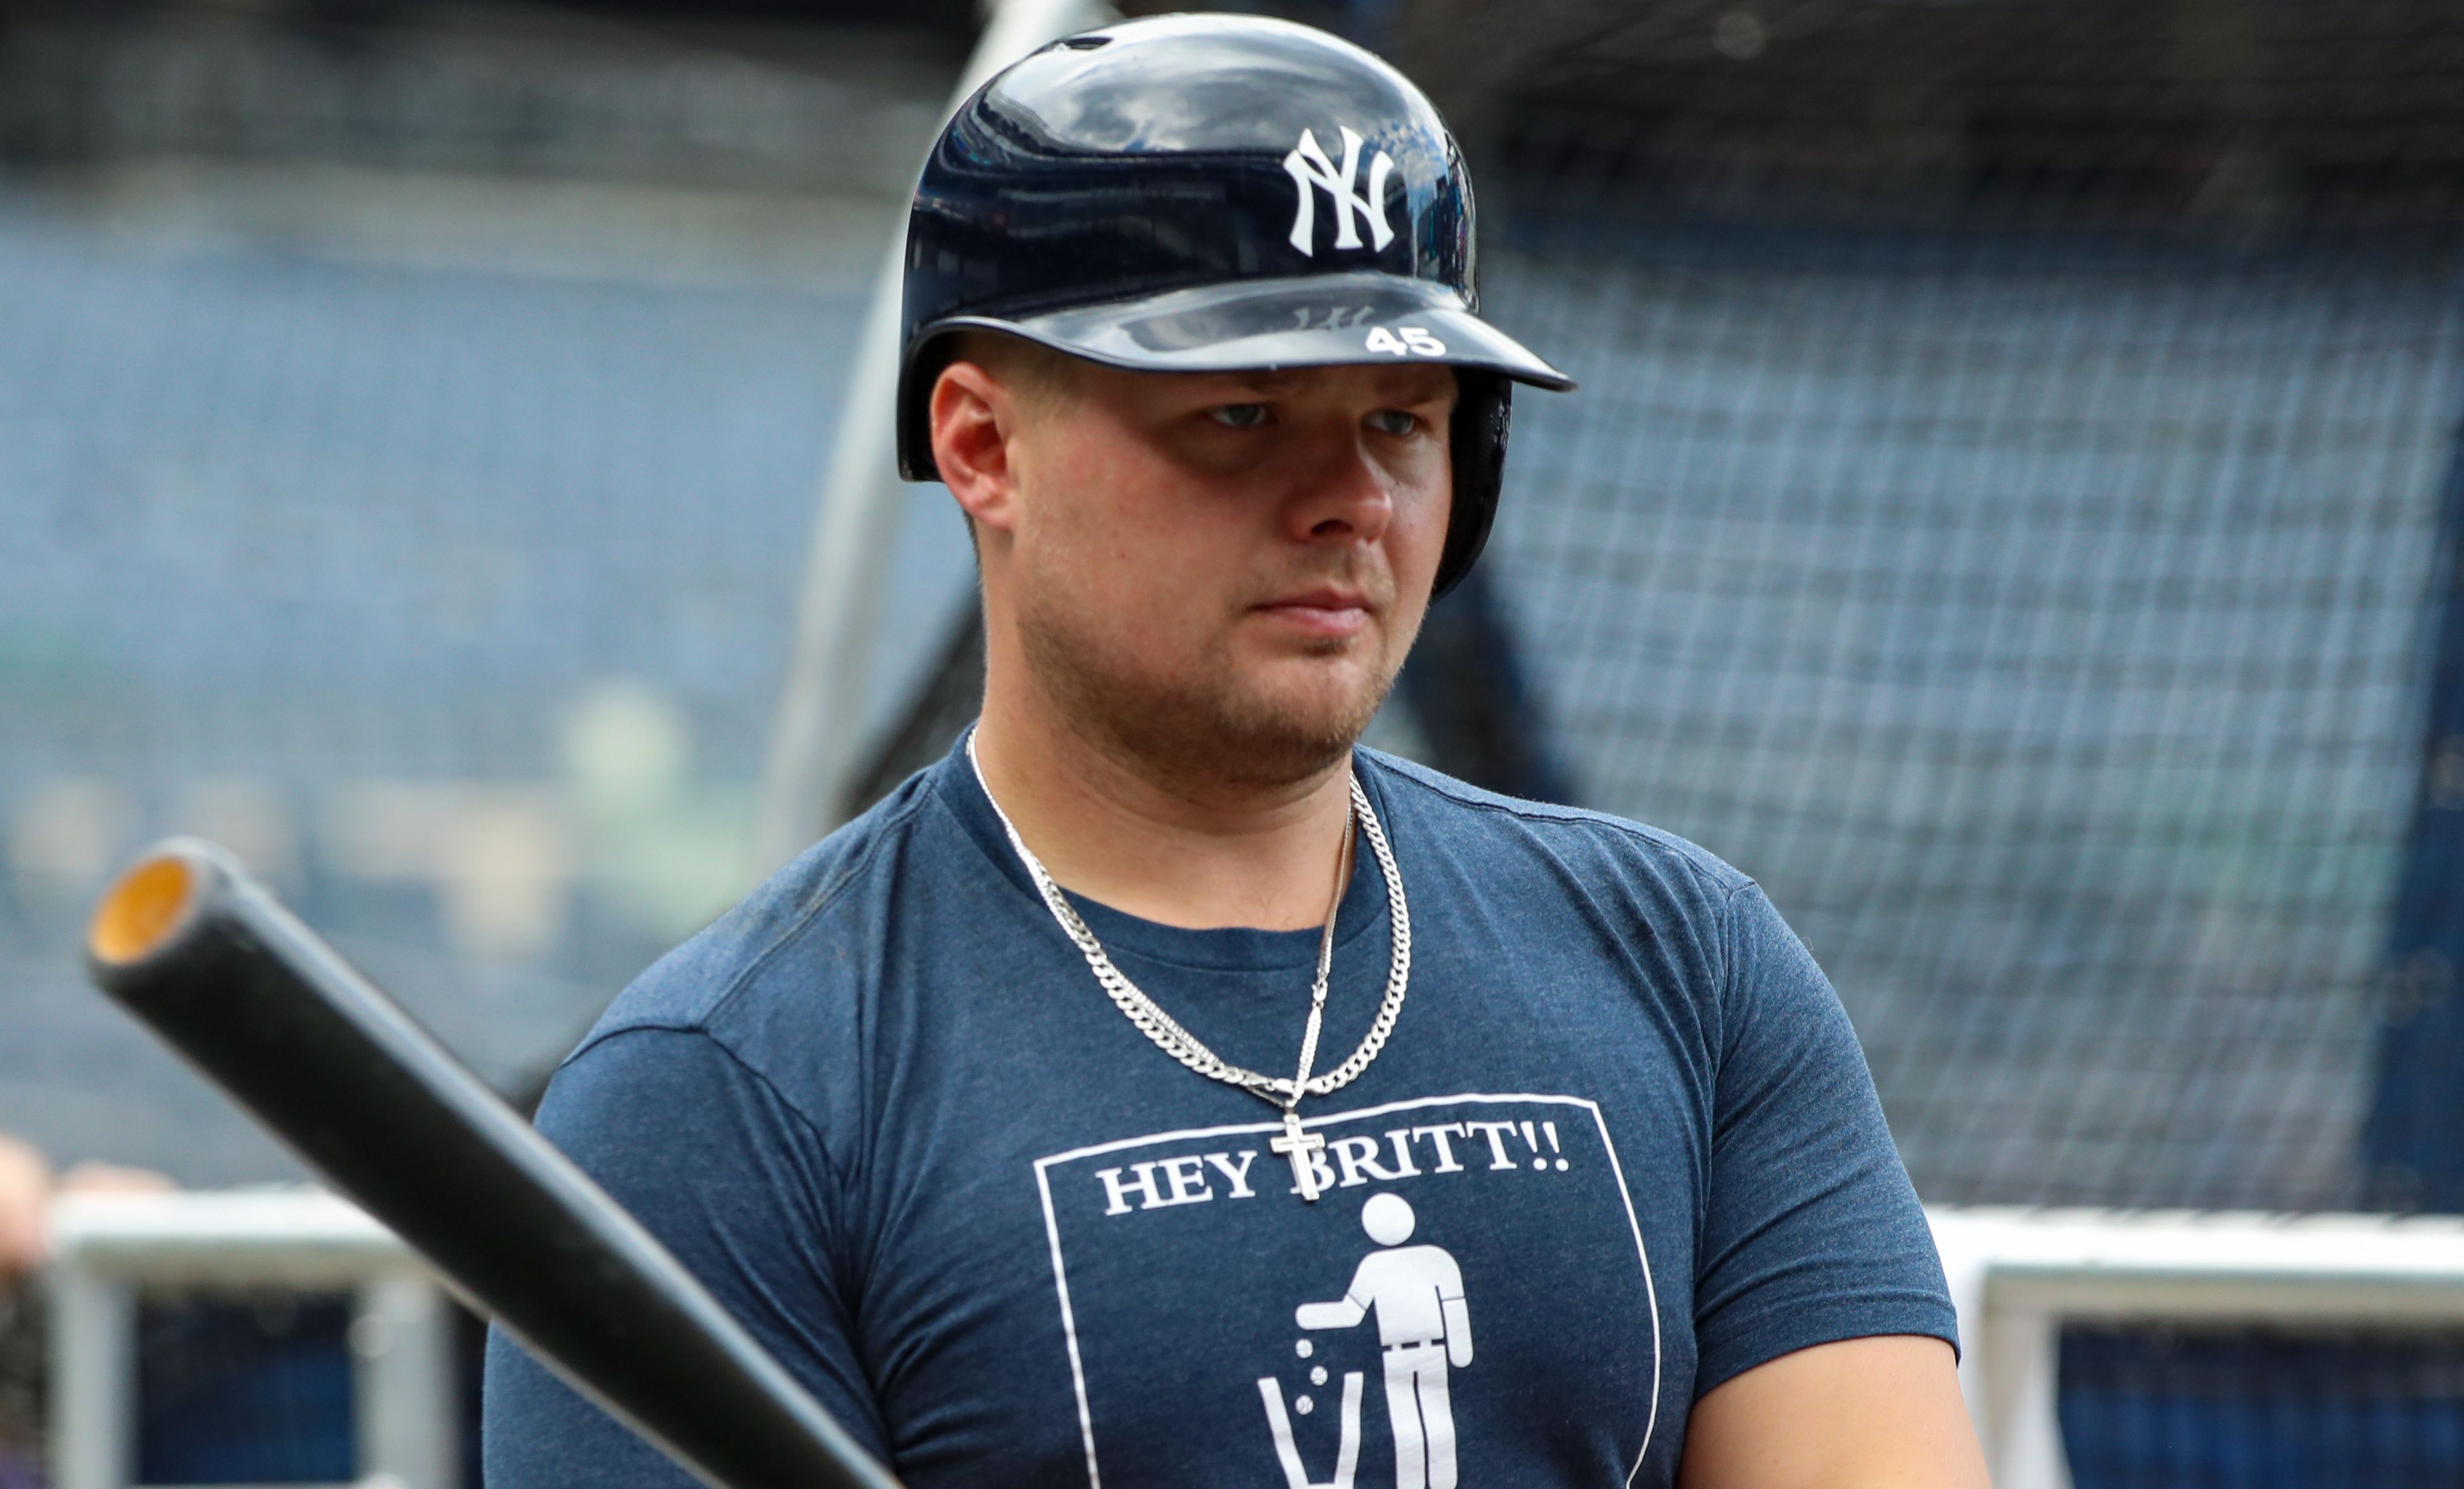 Luke Voit, Yankees nearing decision on surgery